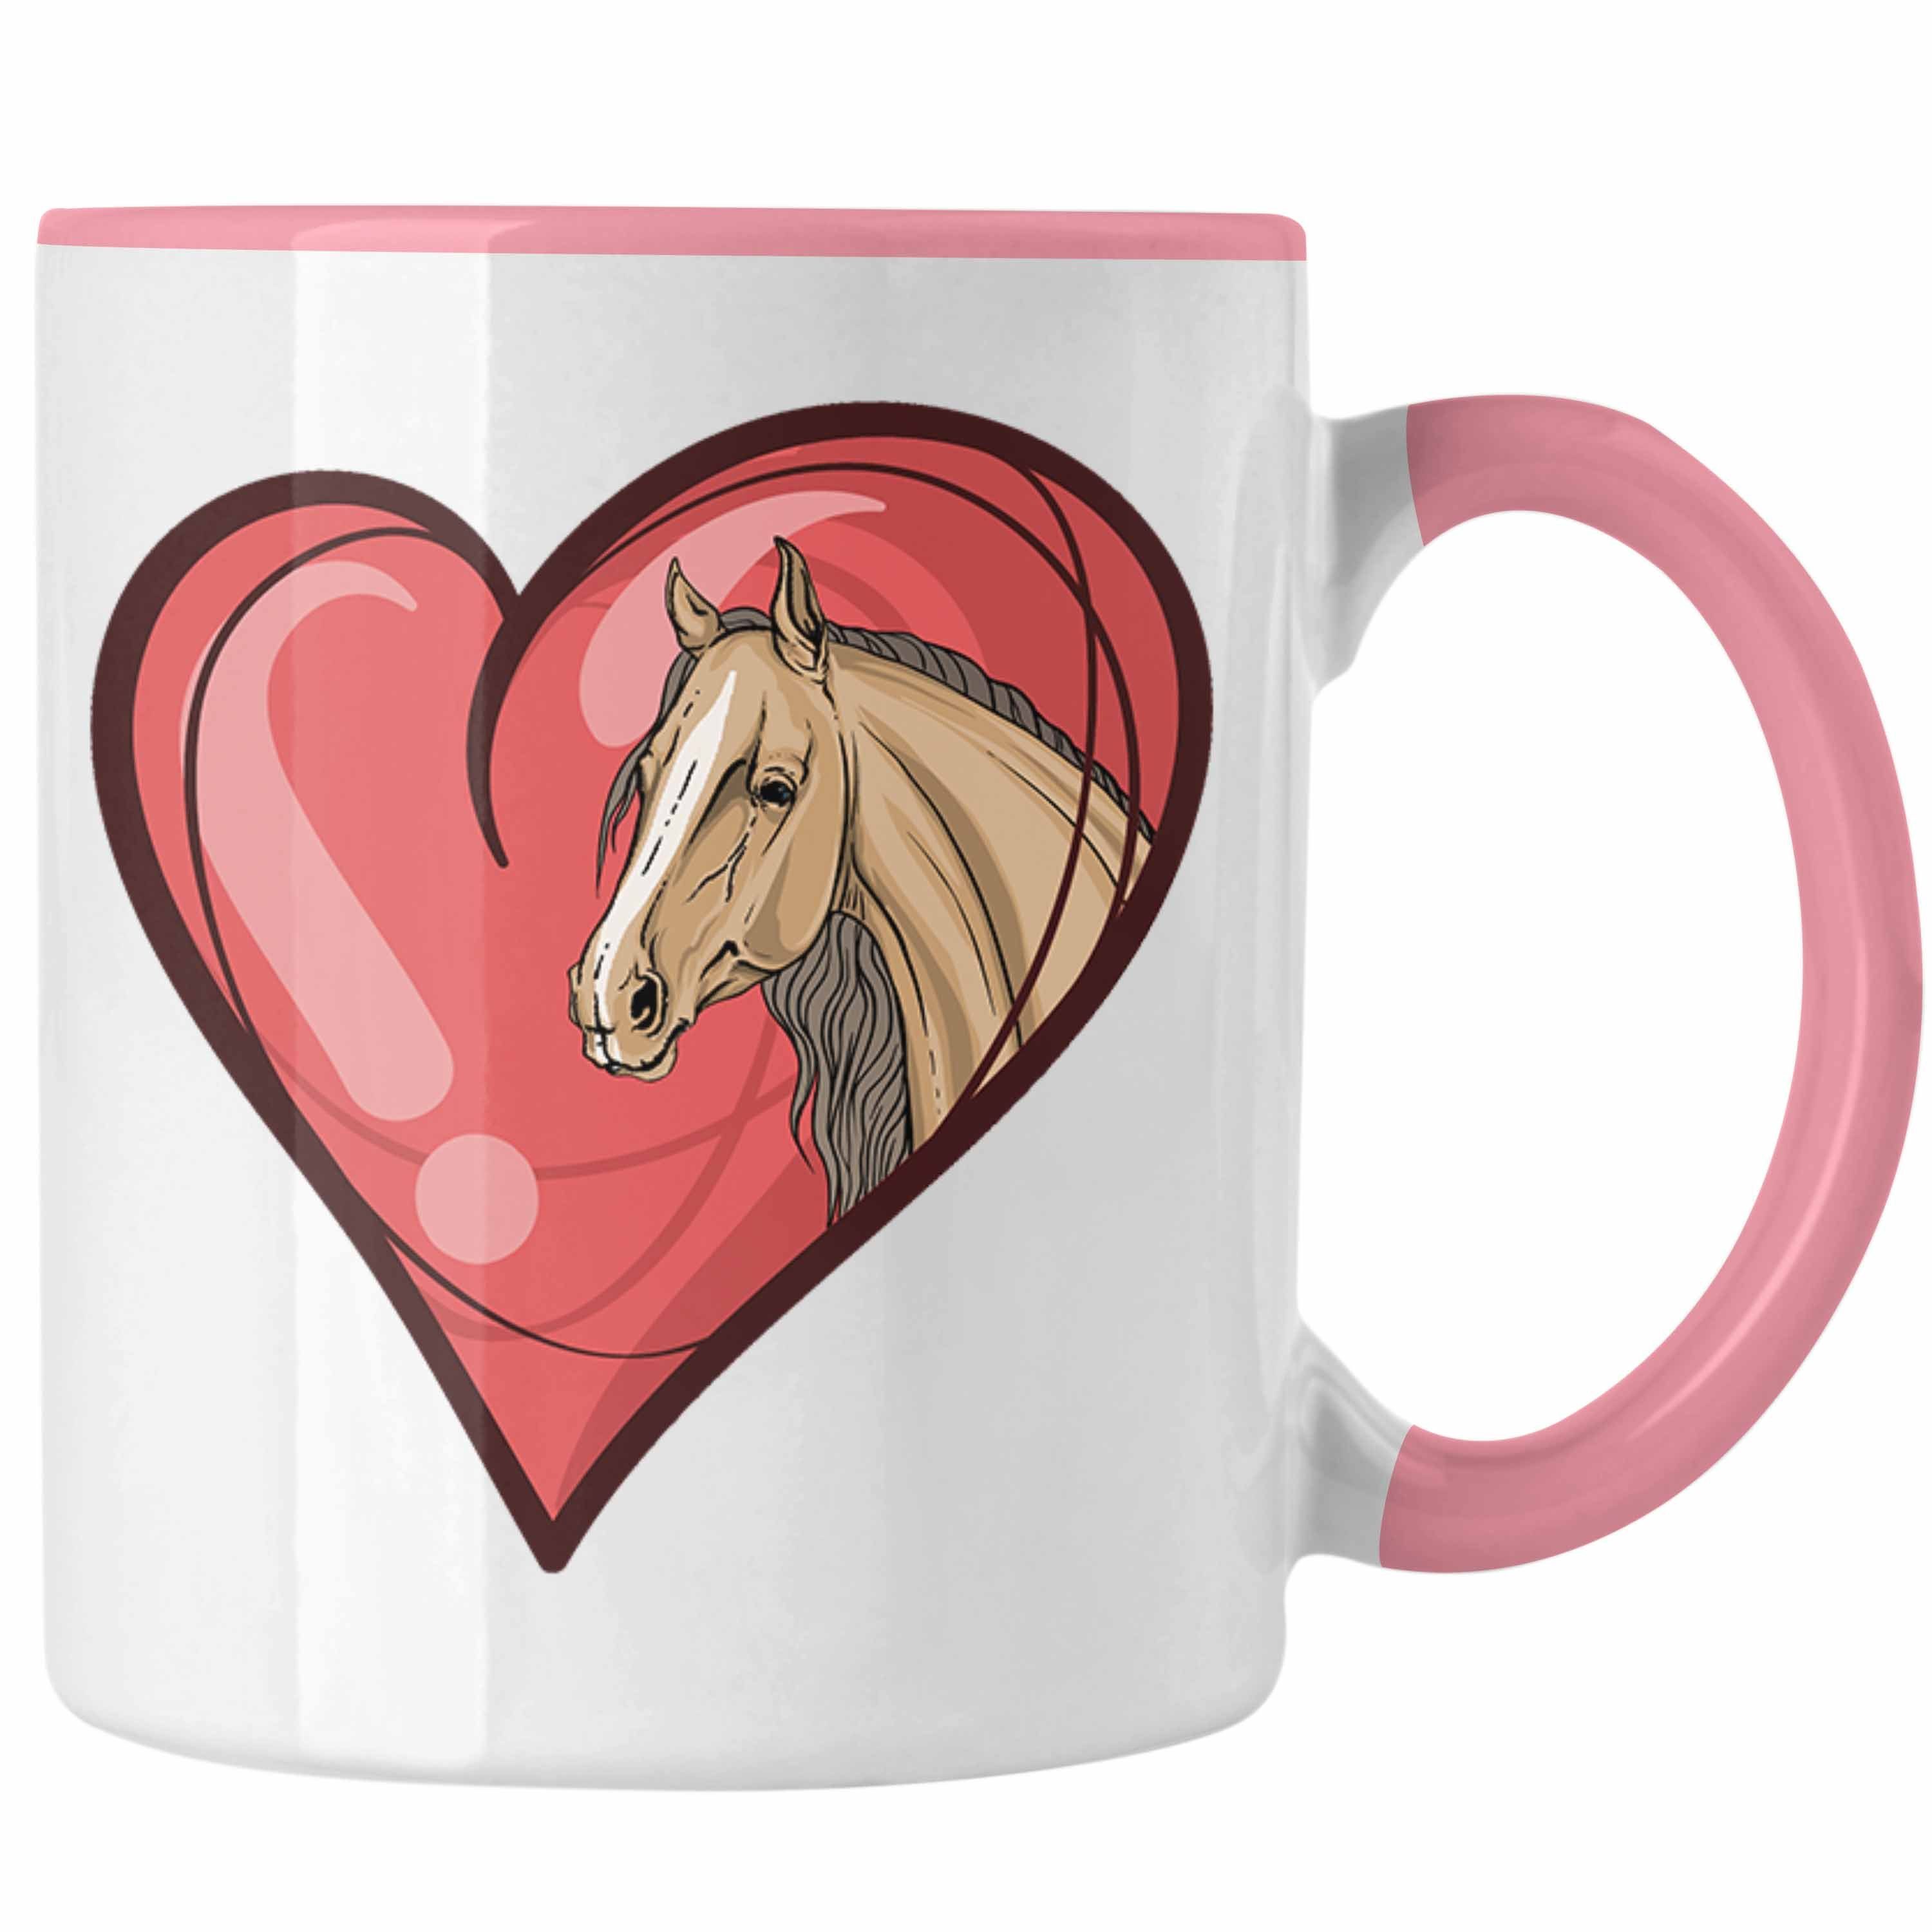 Trendation Tasse Pferde Tasse Grafik Geschenk Lustig Rosa